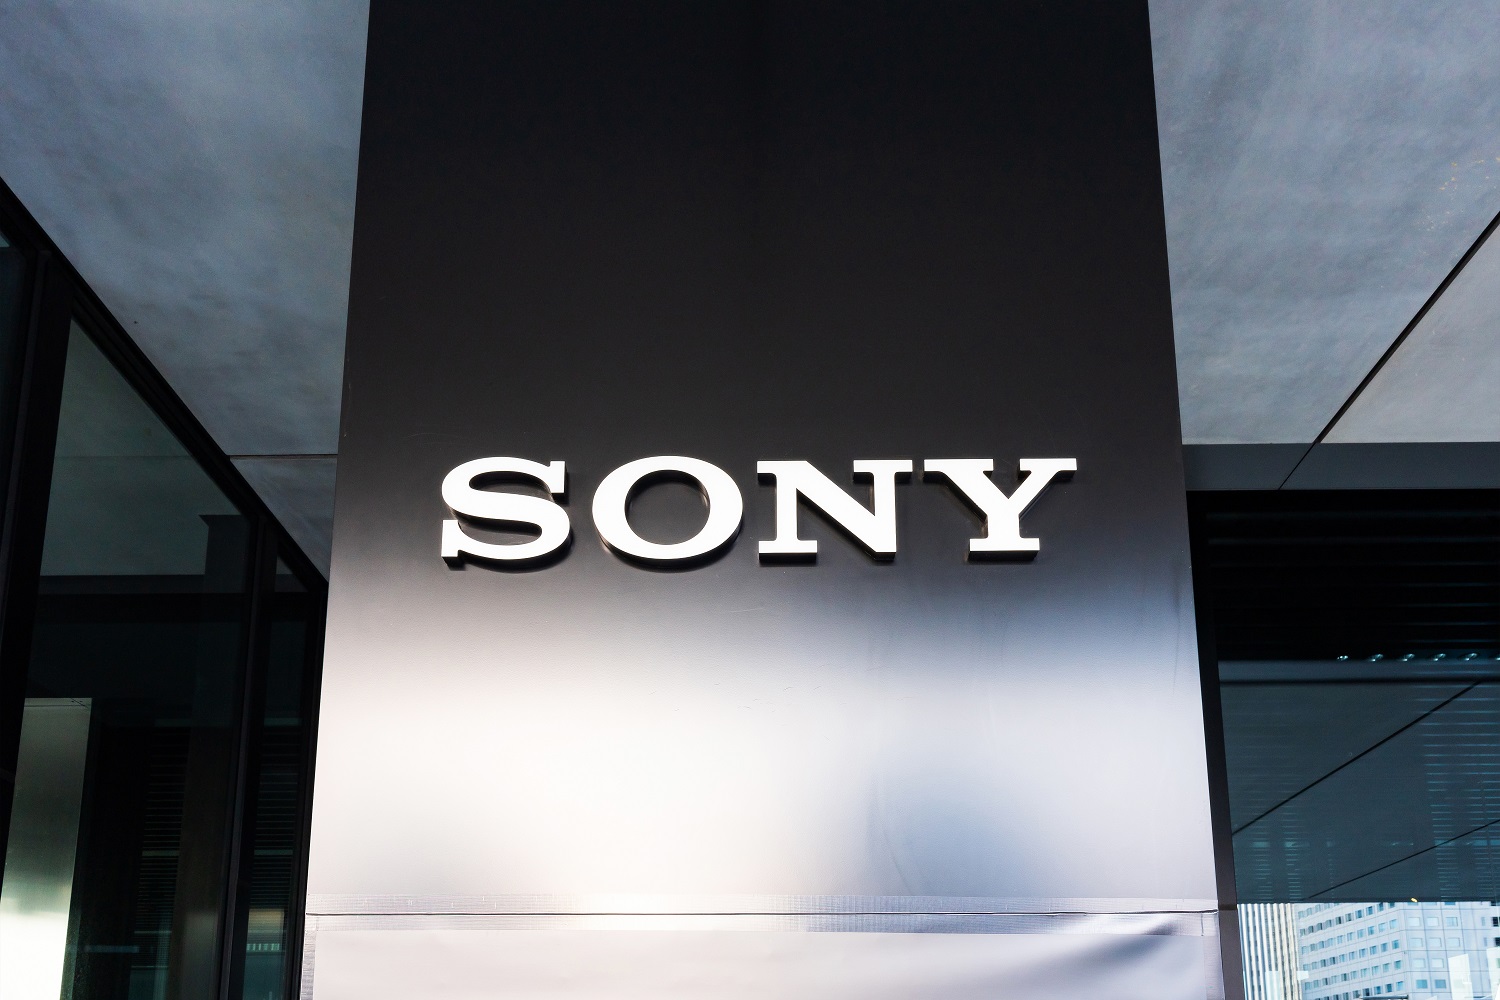 The Sony logo on a building.